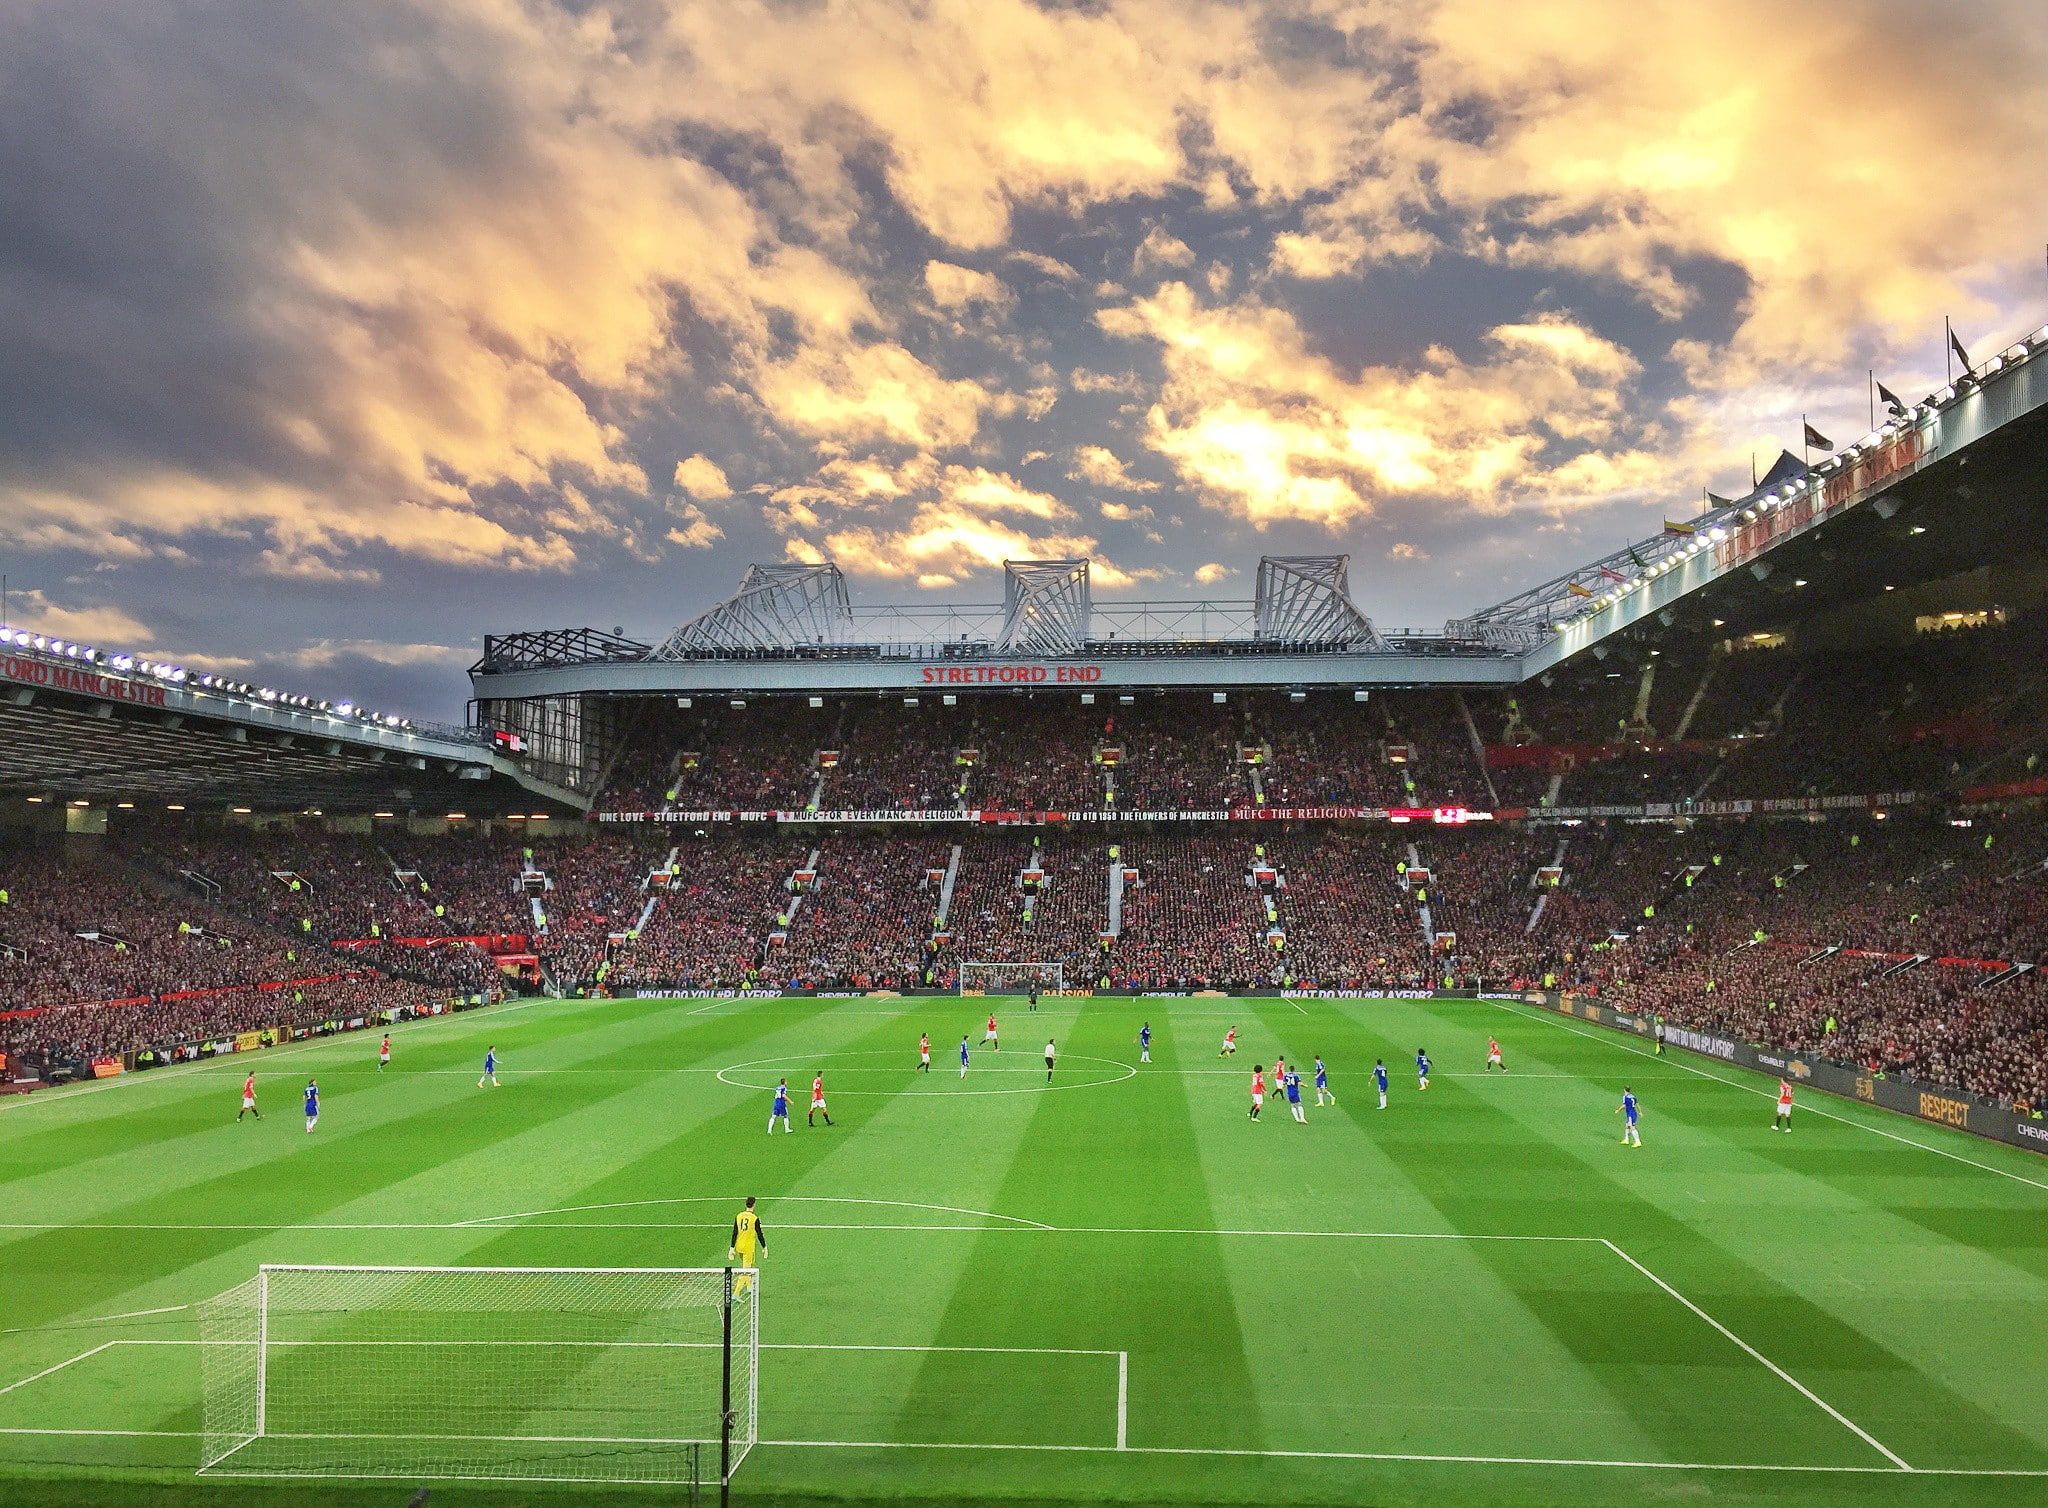 Manchester United vs Chelsea, old trafford, Sunset